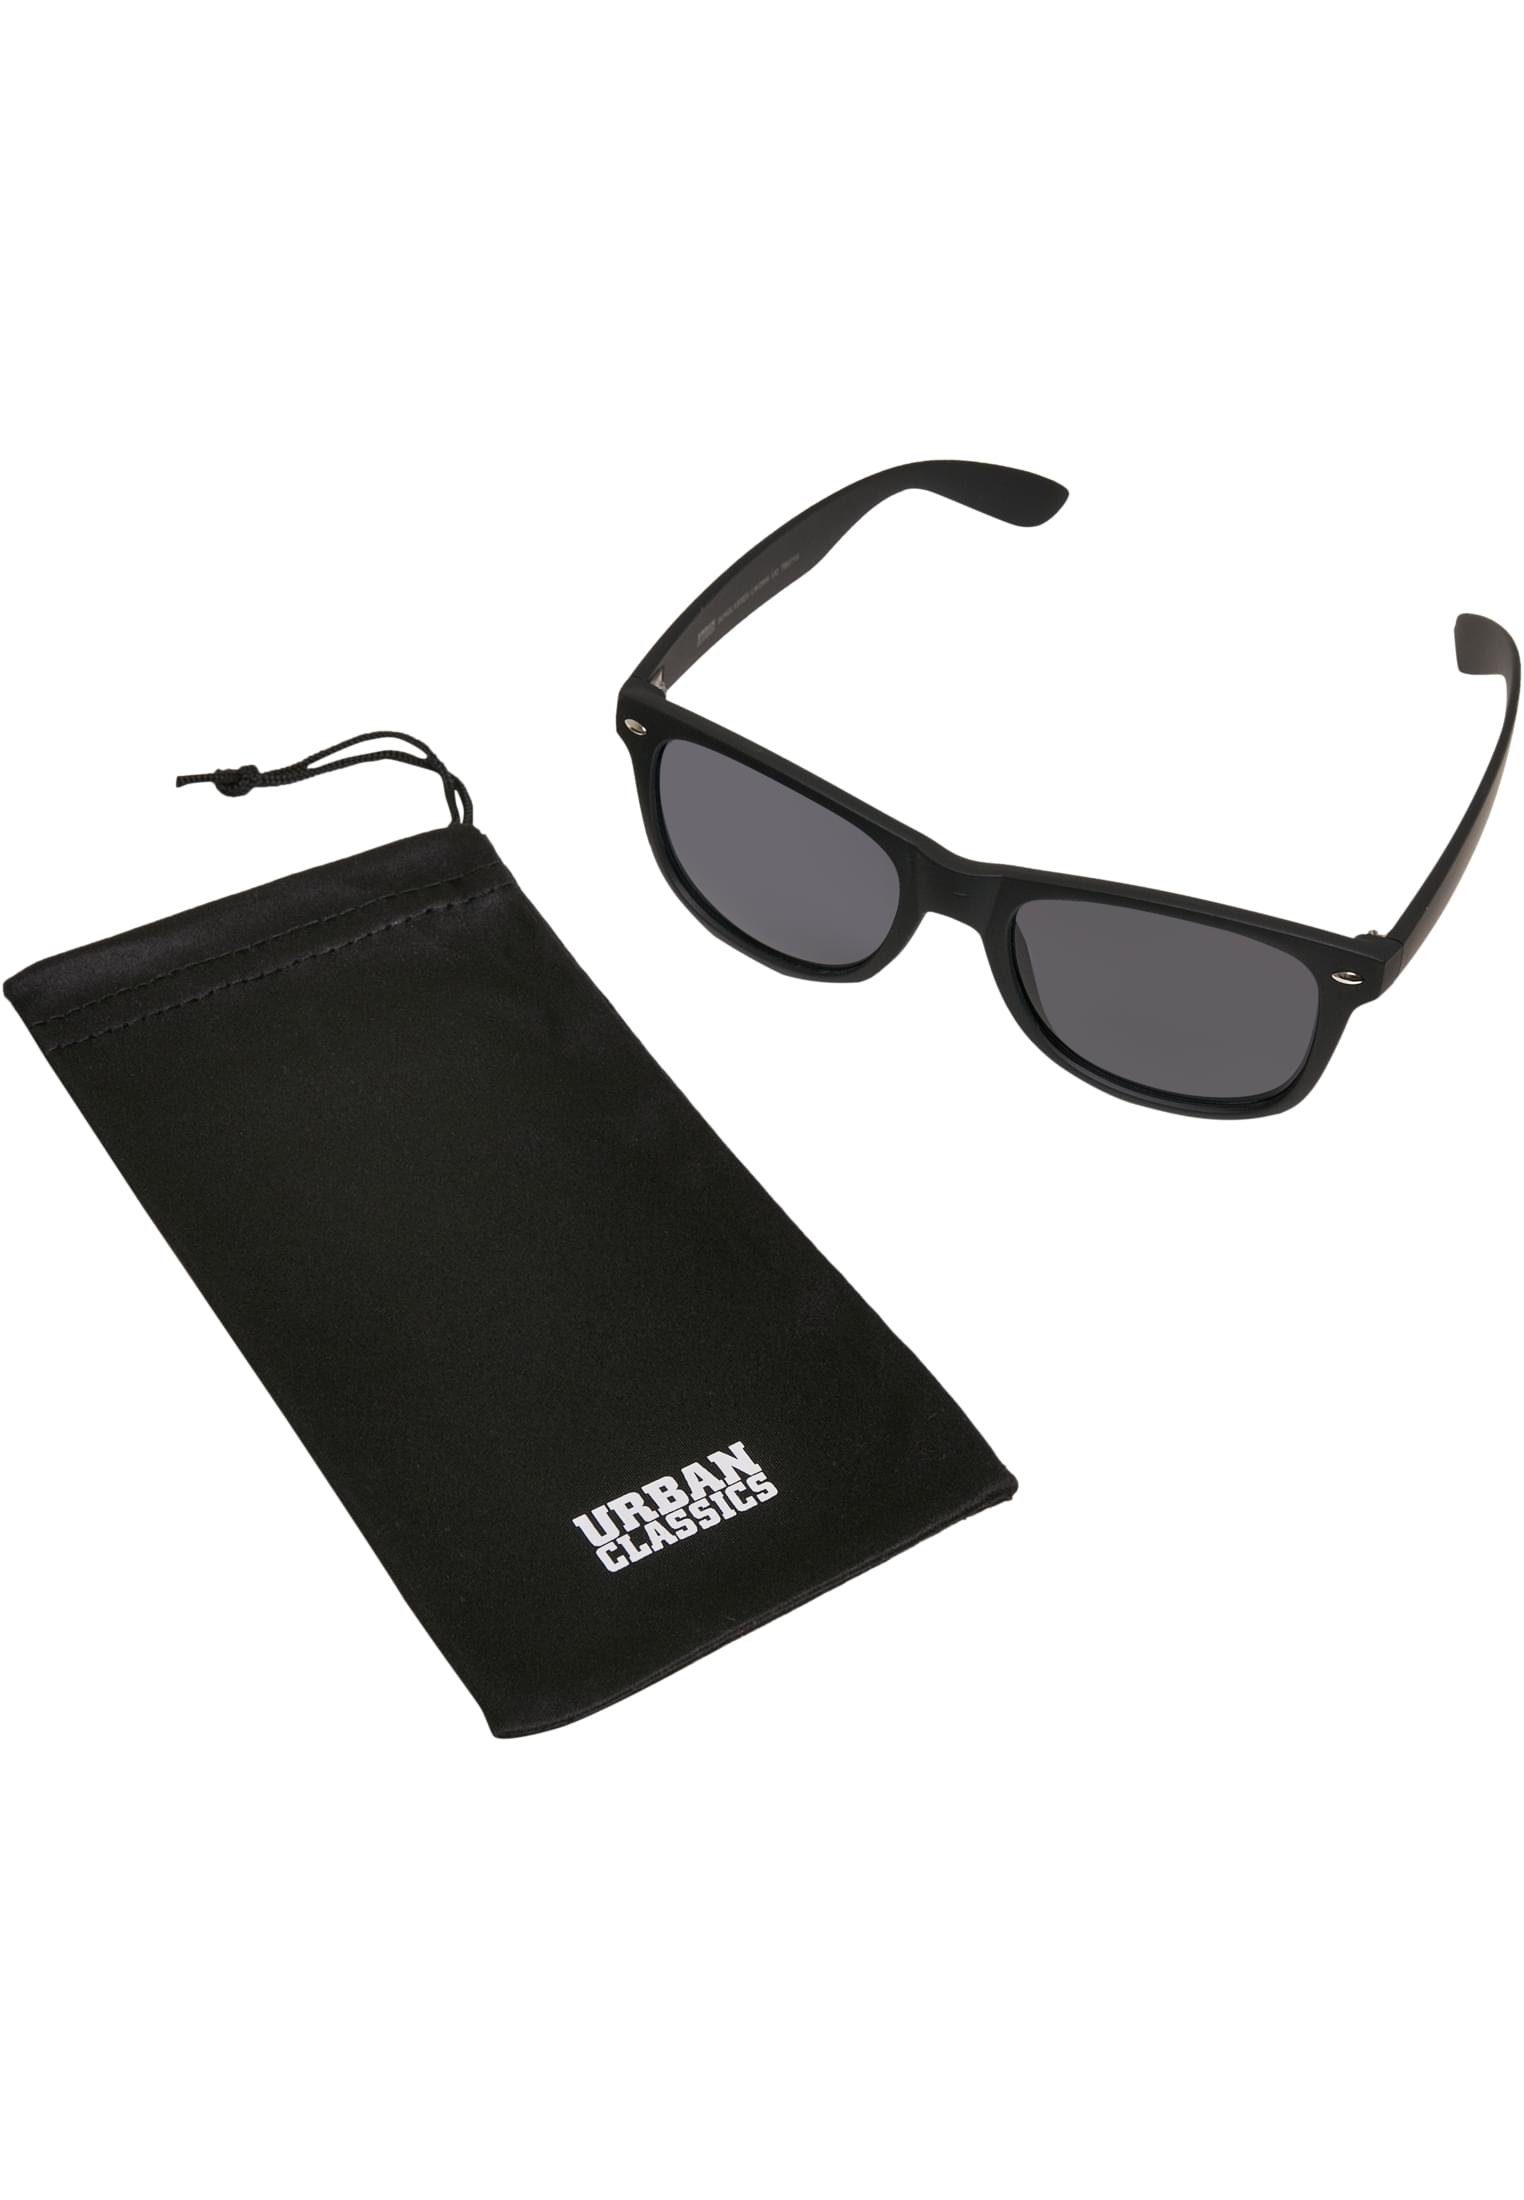 CLASSICS UC URBAN Sunglasses Sonnenbrille Likoma Accessoires black